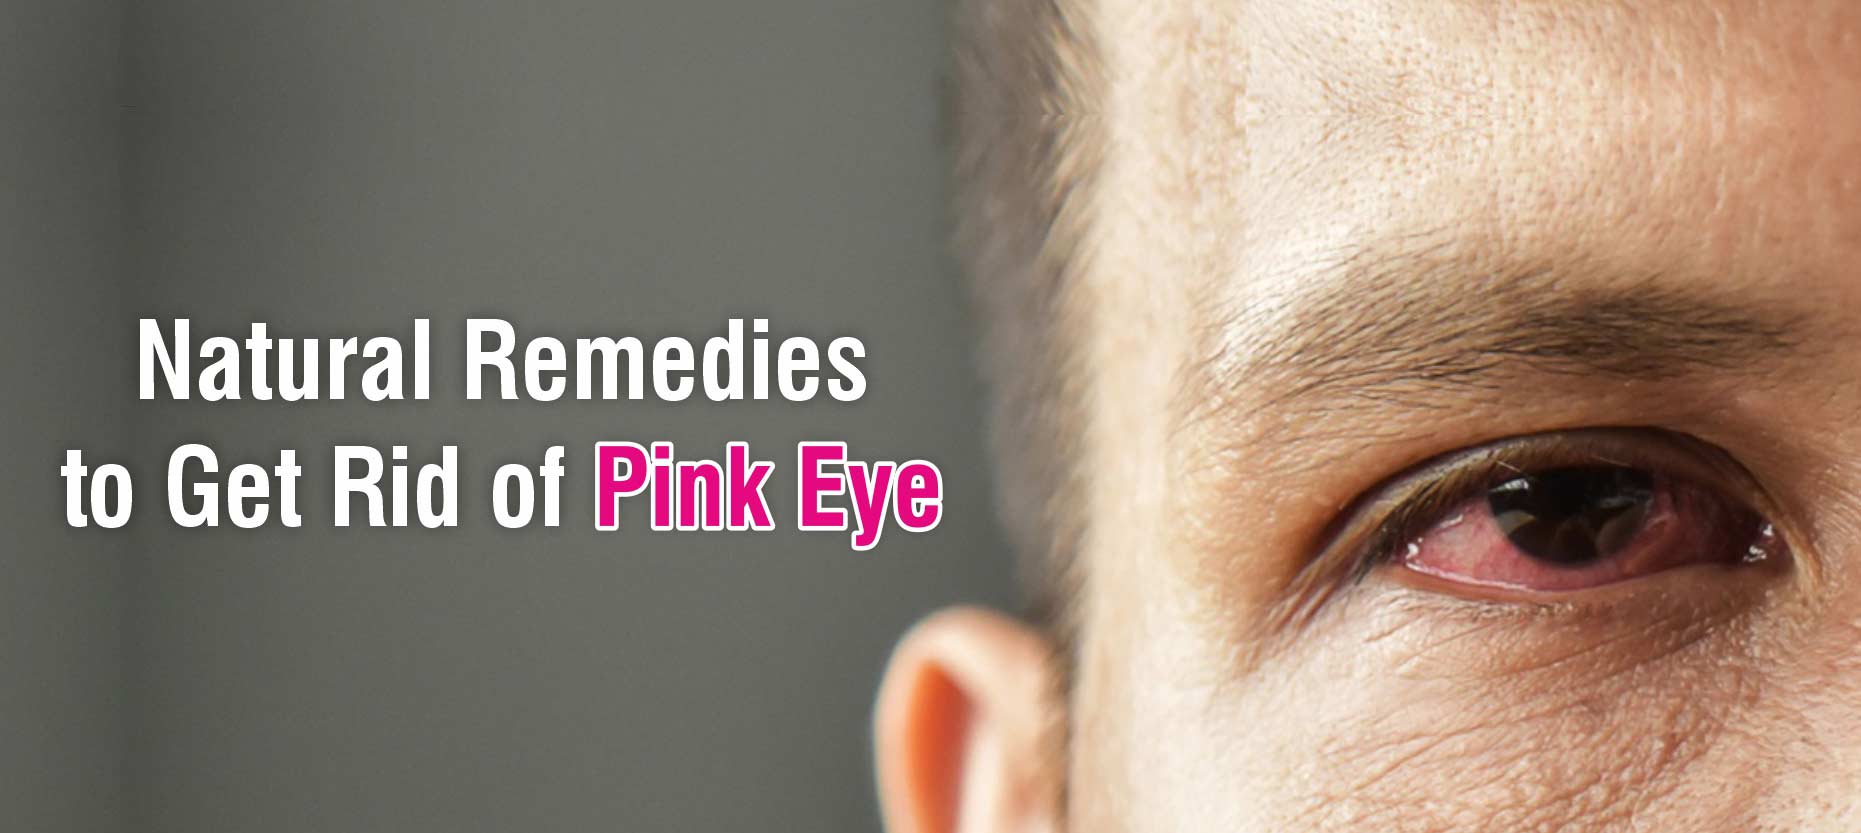 Natural Remedies to Get Rid of Pink Eye